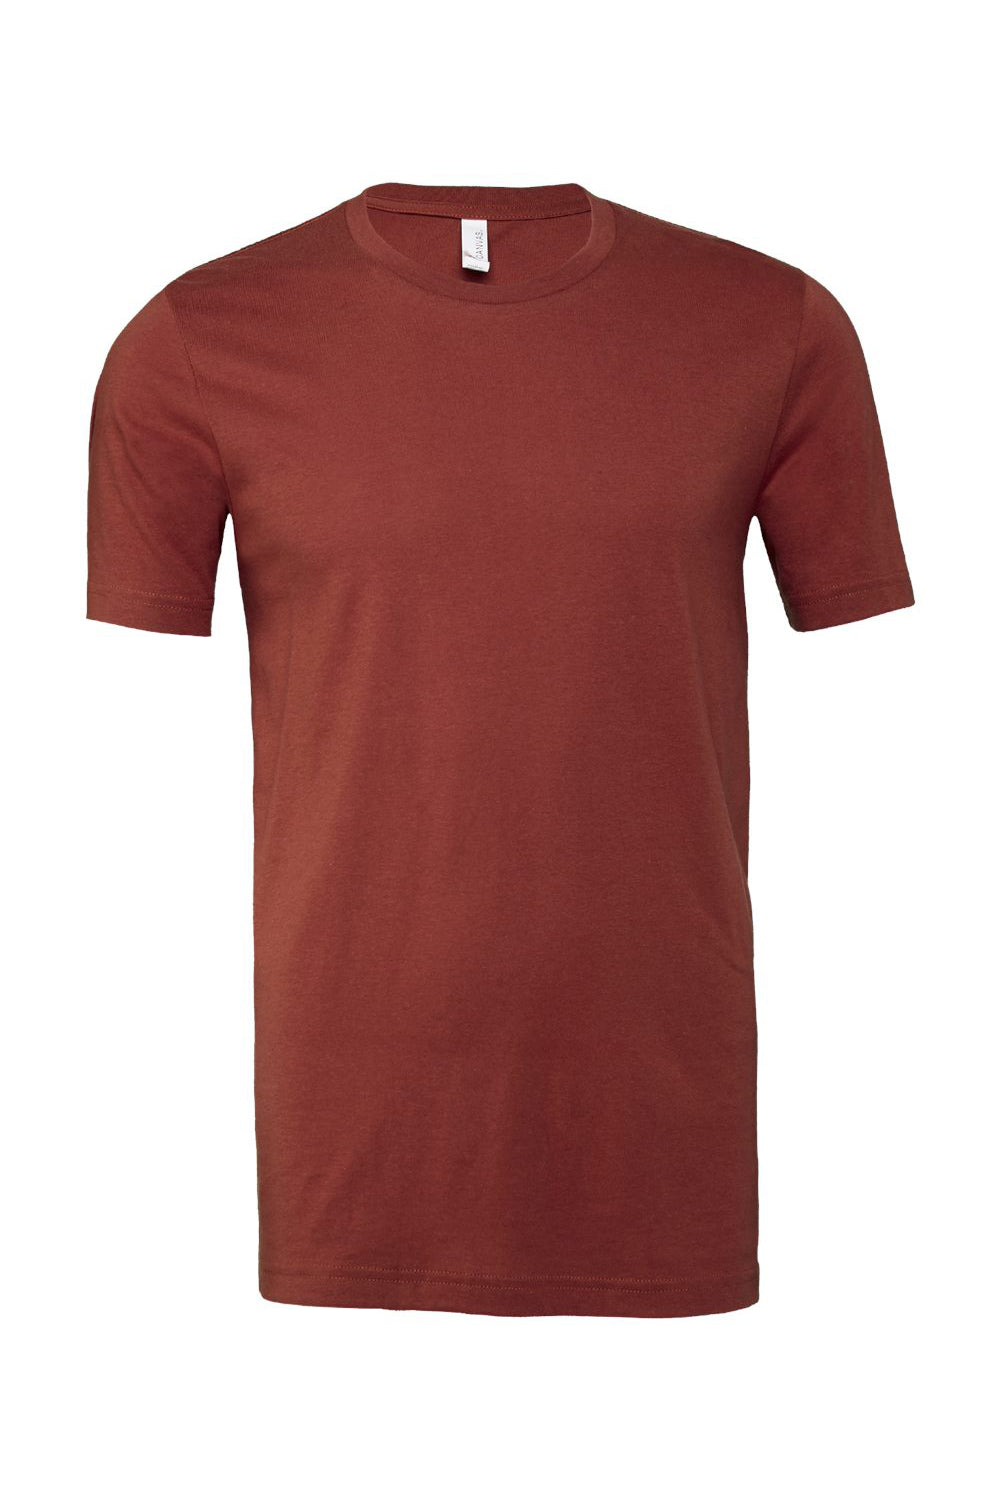 Bella + Canvas BC3001/3001C Mens Jersey Short Sleeve Crewneck T-Shirt Rust Red Flat Front